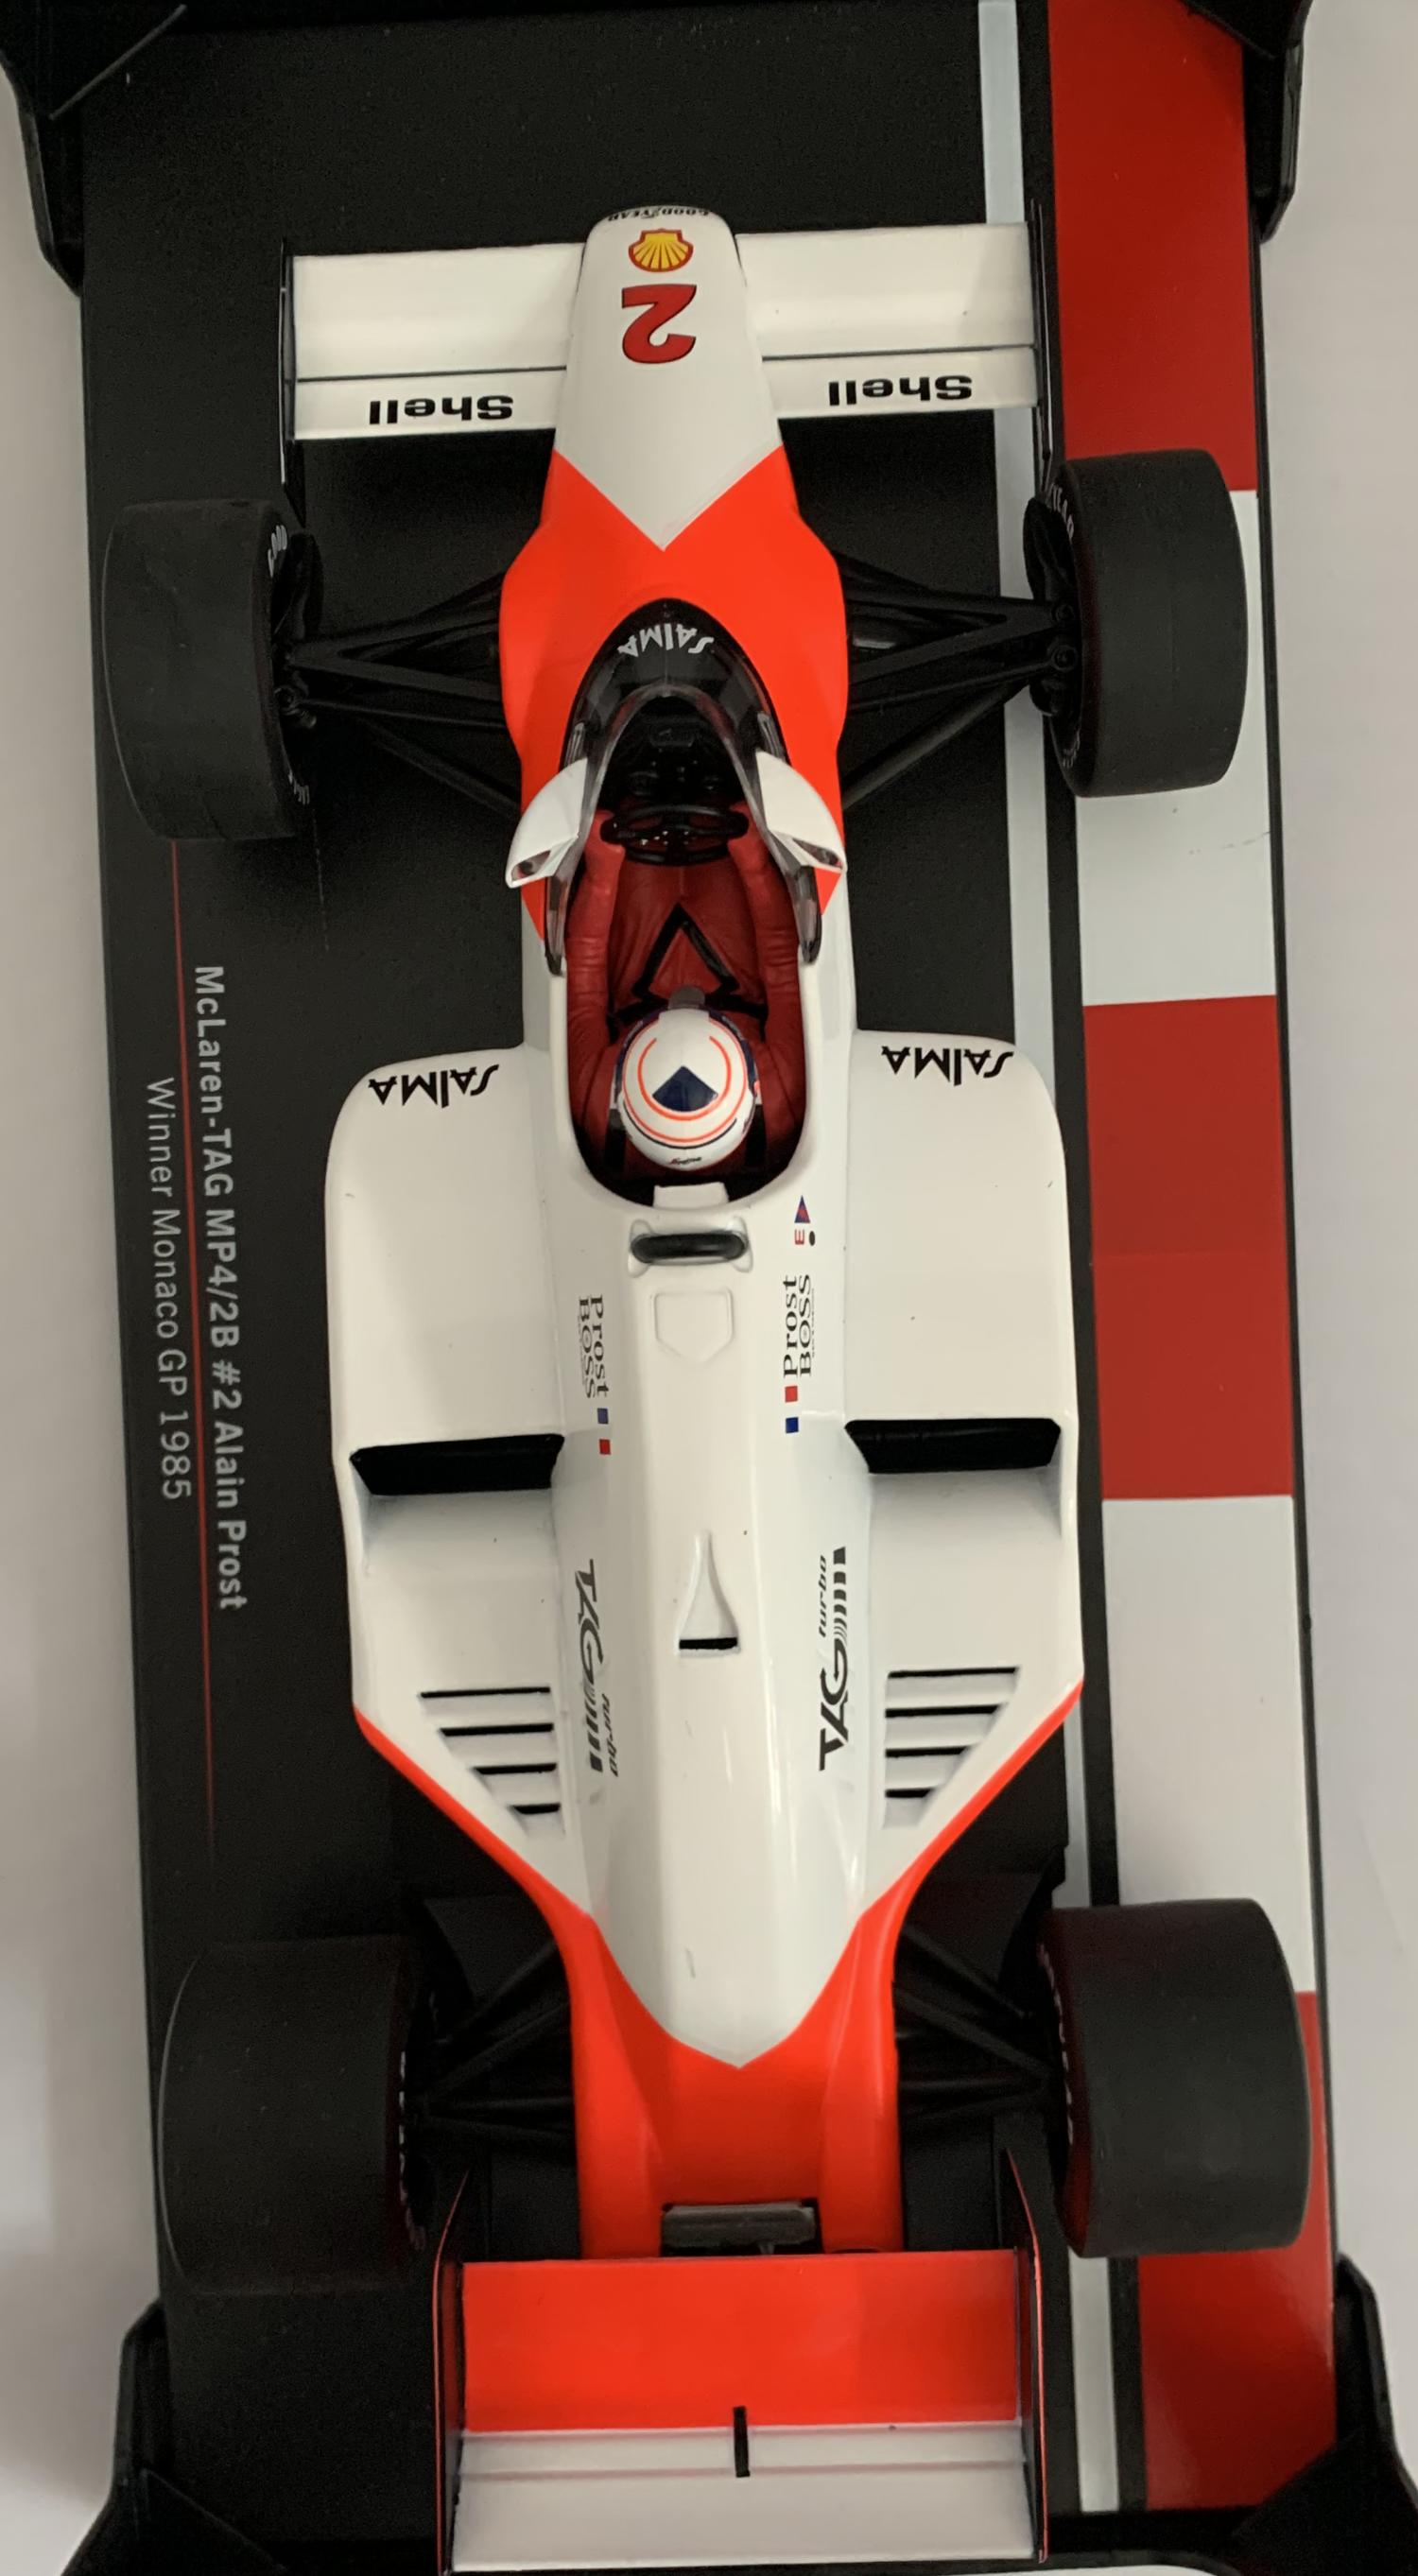 A very good representation of the McLaren TAG MP4/2B #2 Marlboro McLaren